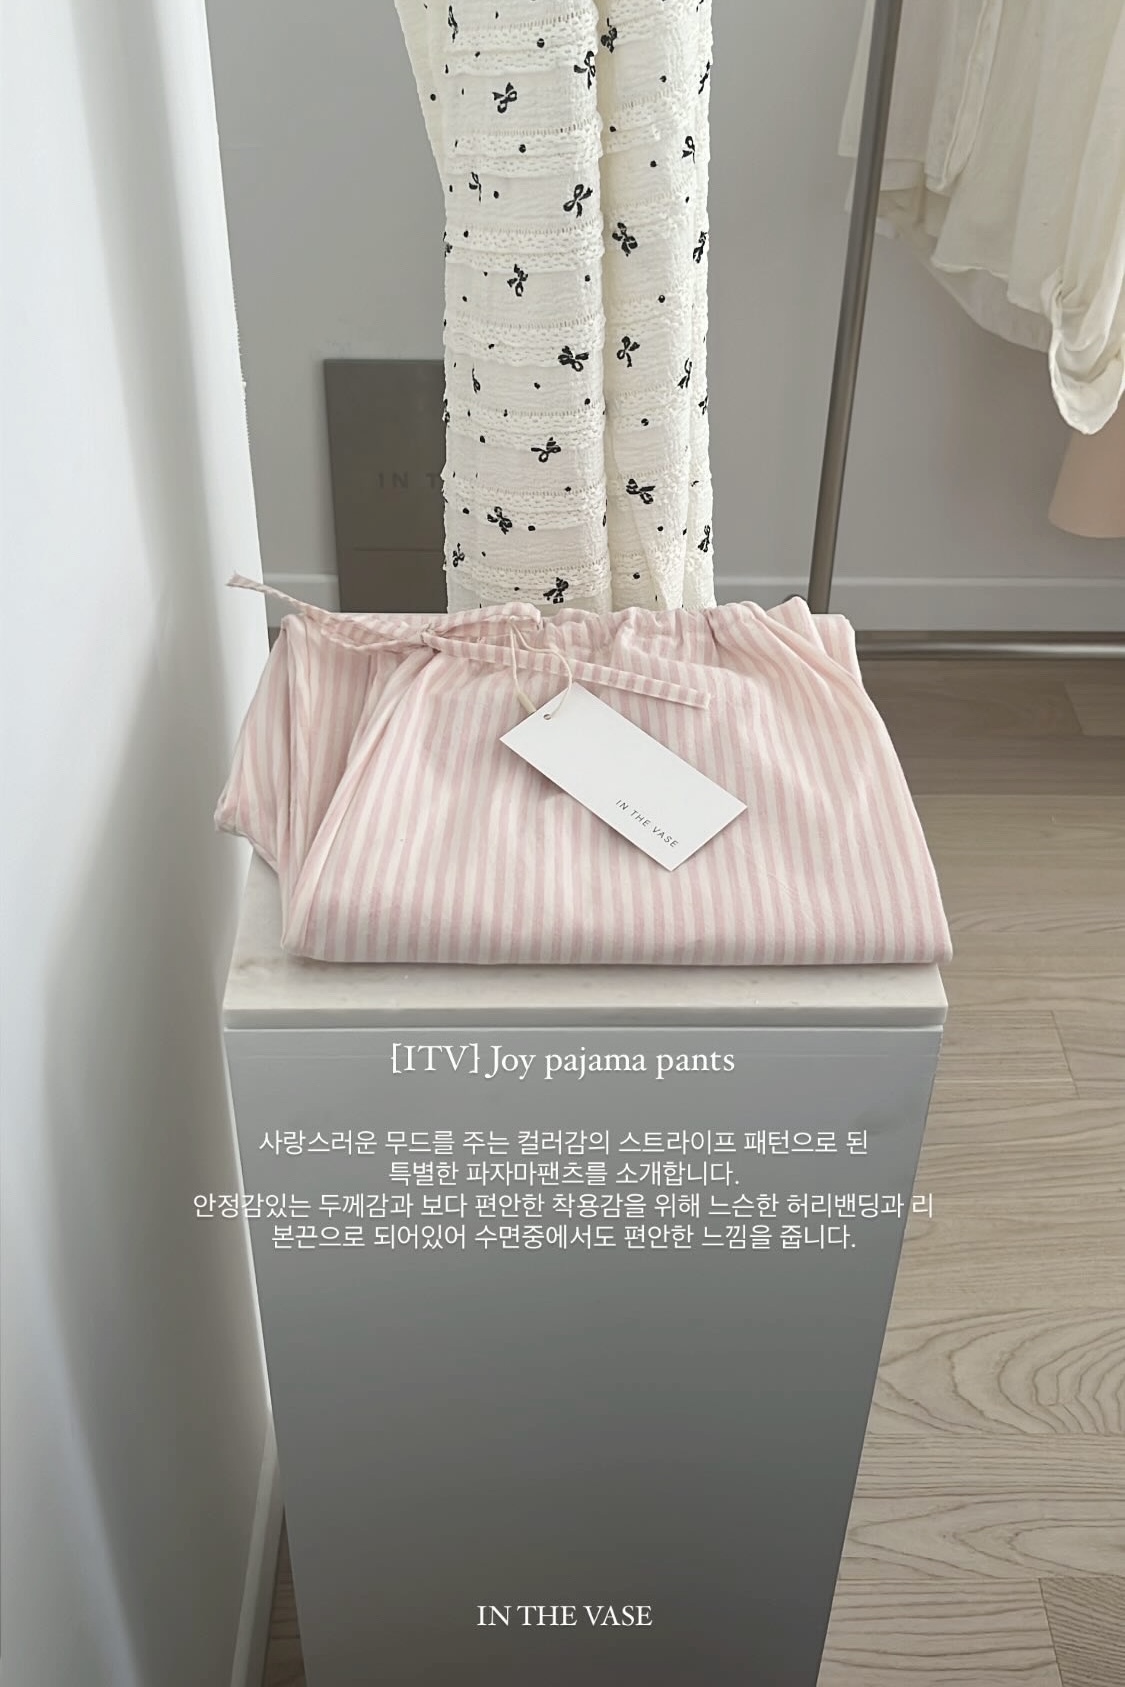 [ITV] Joy pajama pants